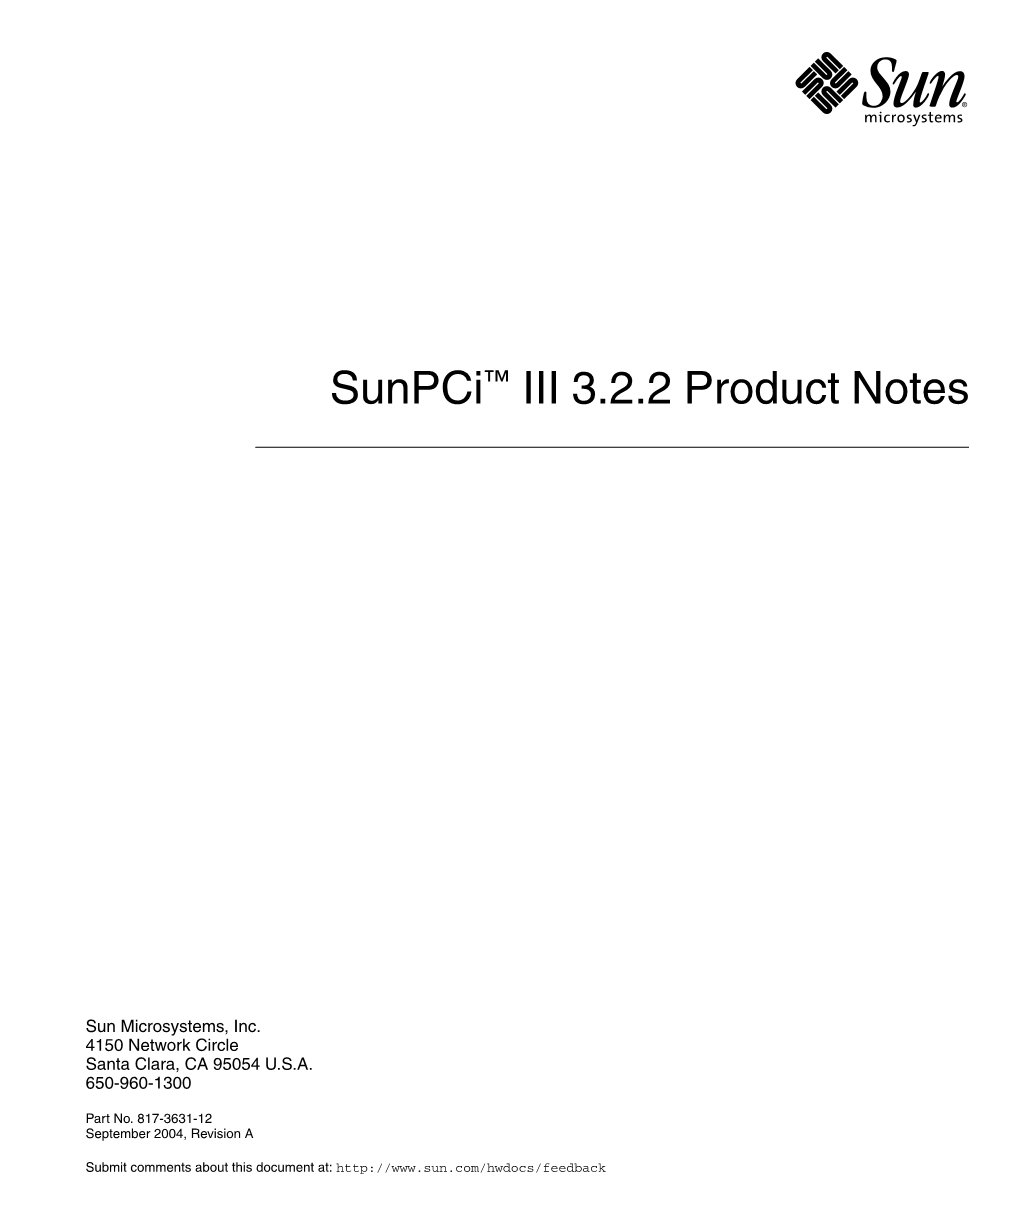 Sunpci III 3.2.2 Product Notes